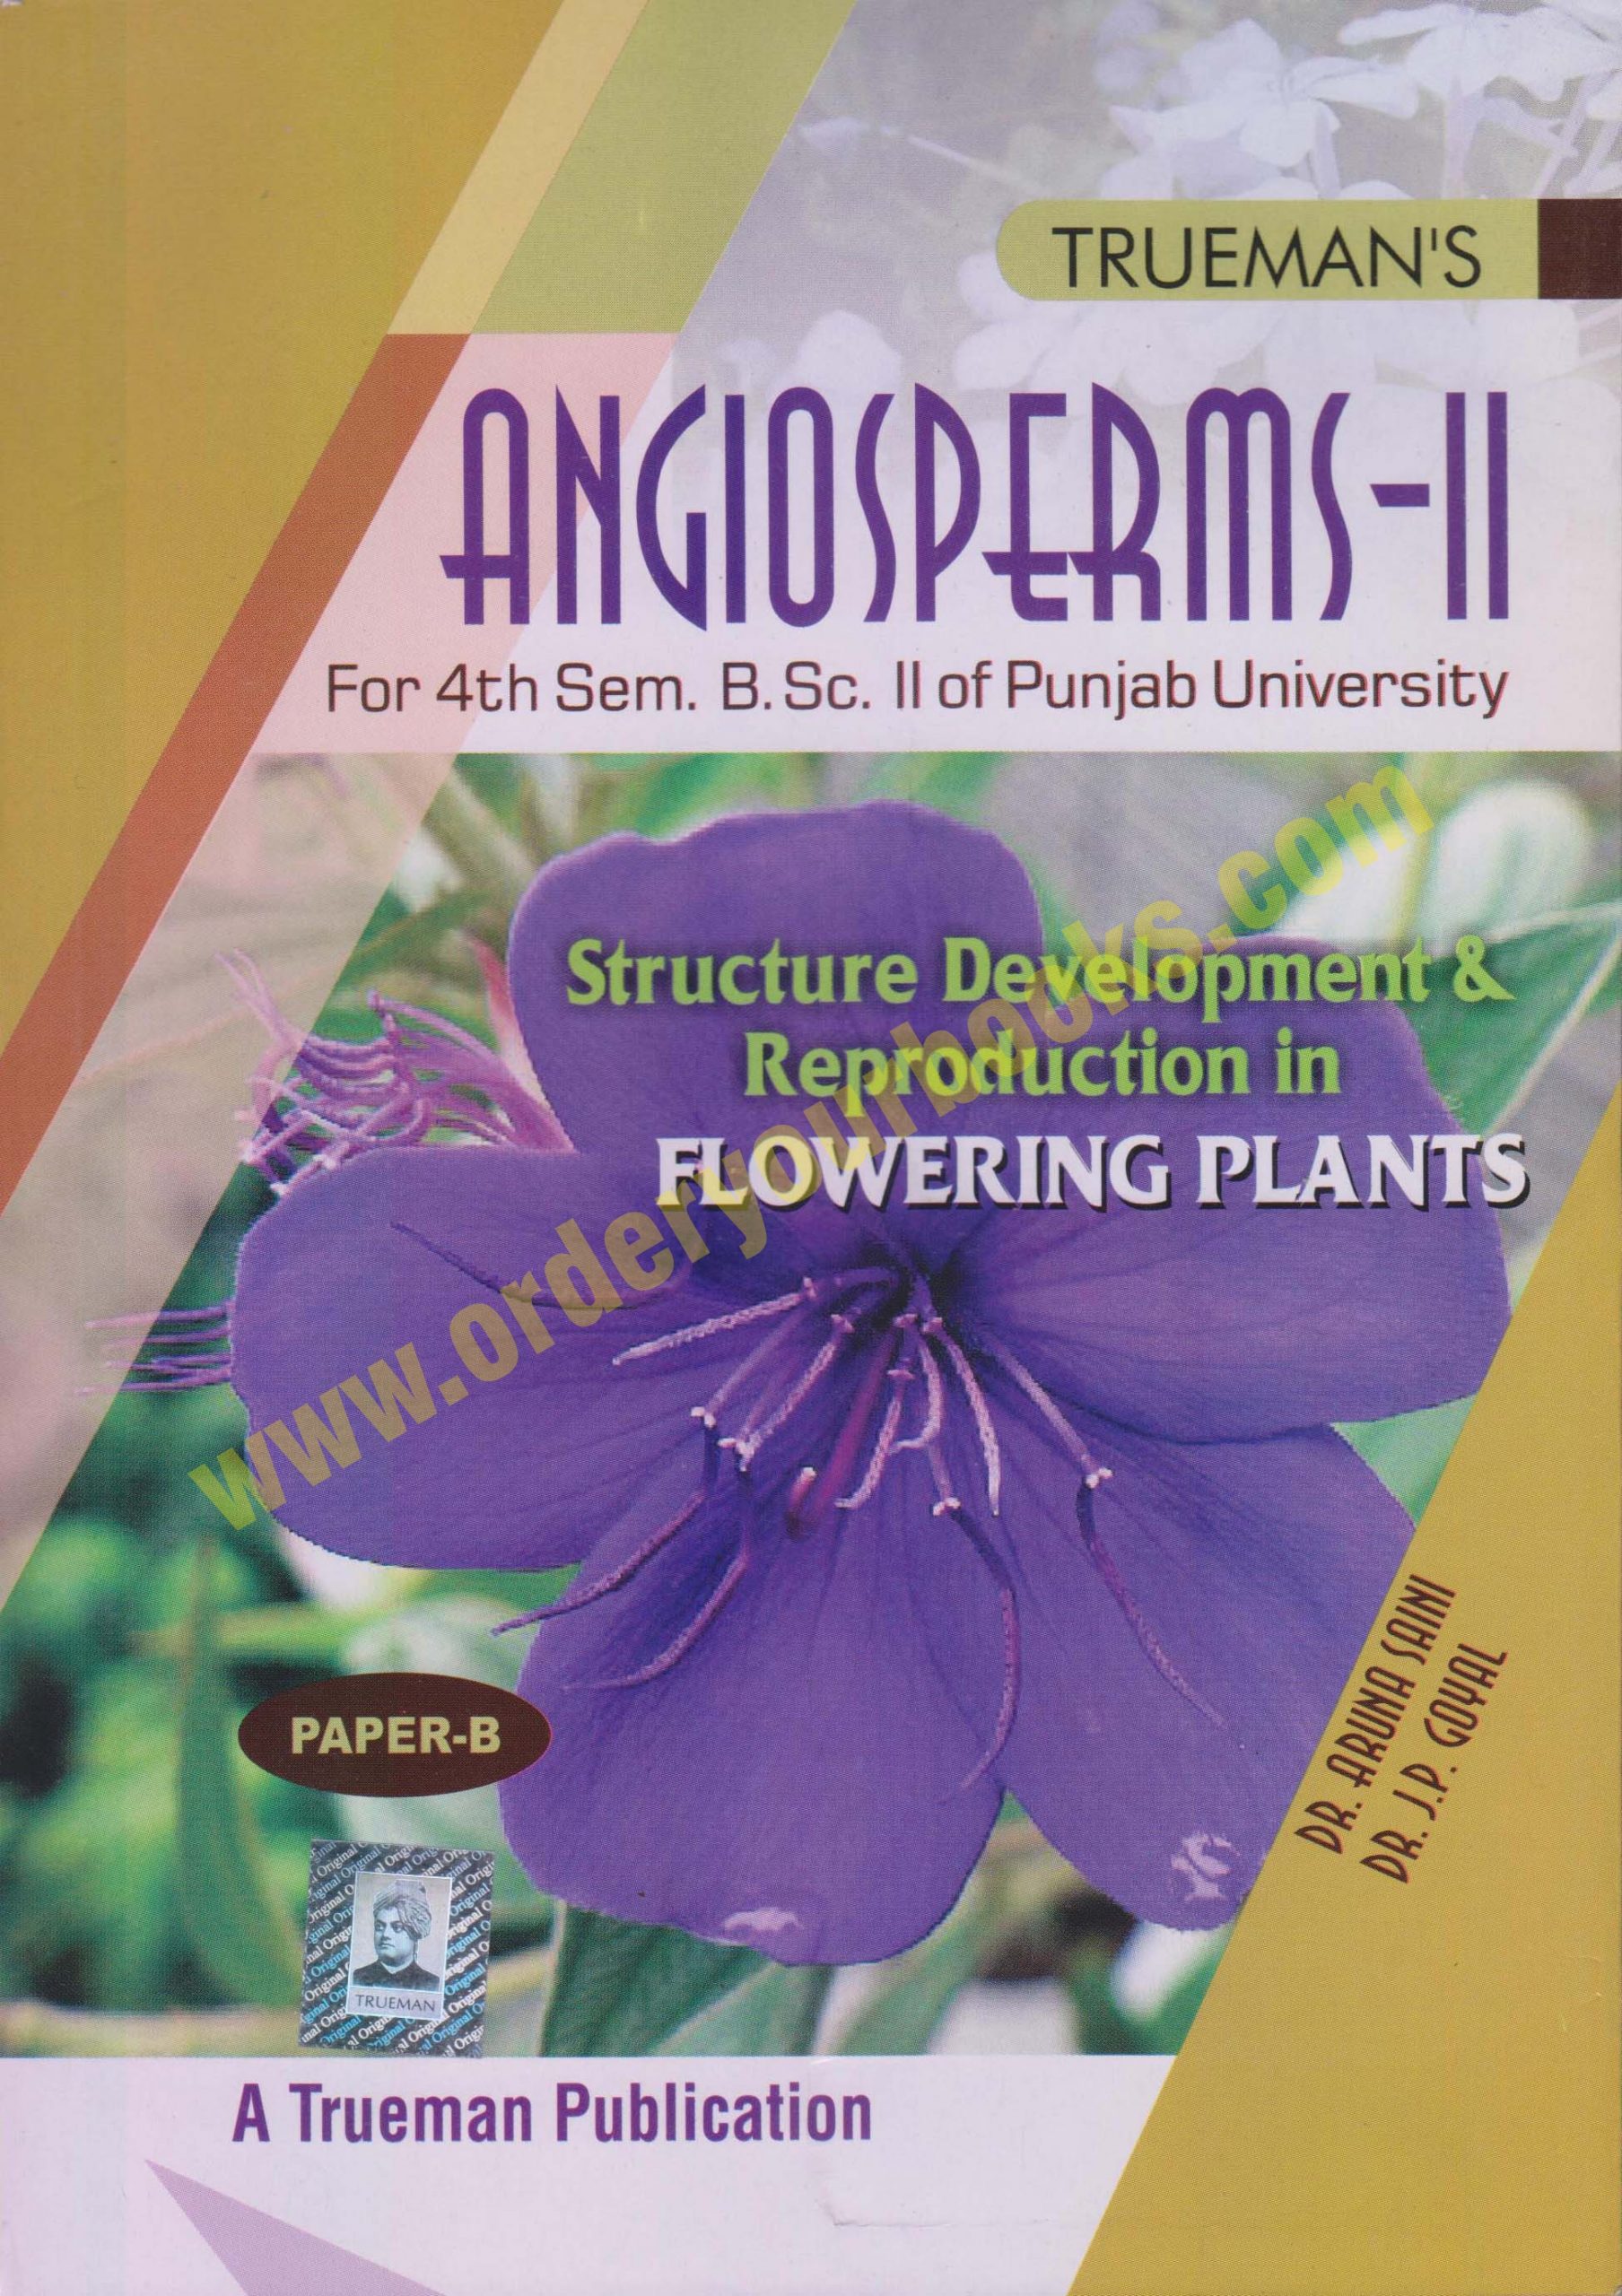 Truemans Angiosperms-2, For 4th Sem. (B.Sc. 2) P.U. by Dr. Aruna Saini & Dr. J.P. Goyal Edition 2021